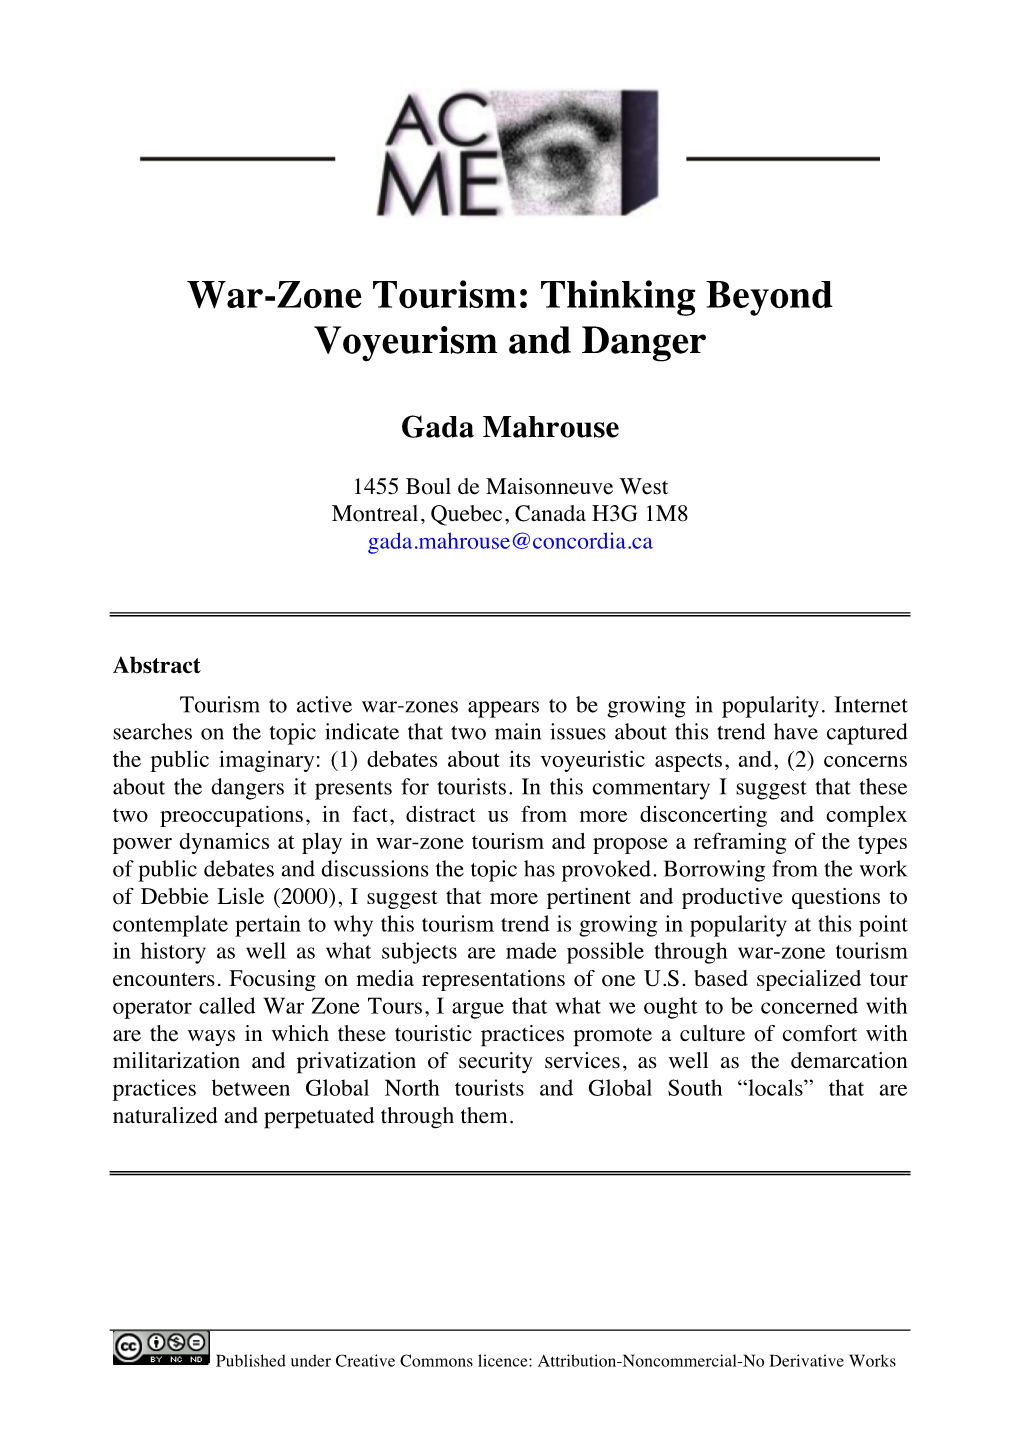 War-Zone Tourism: Thinking Beyond Voyeurism and Danger